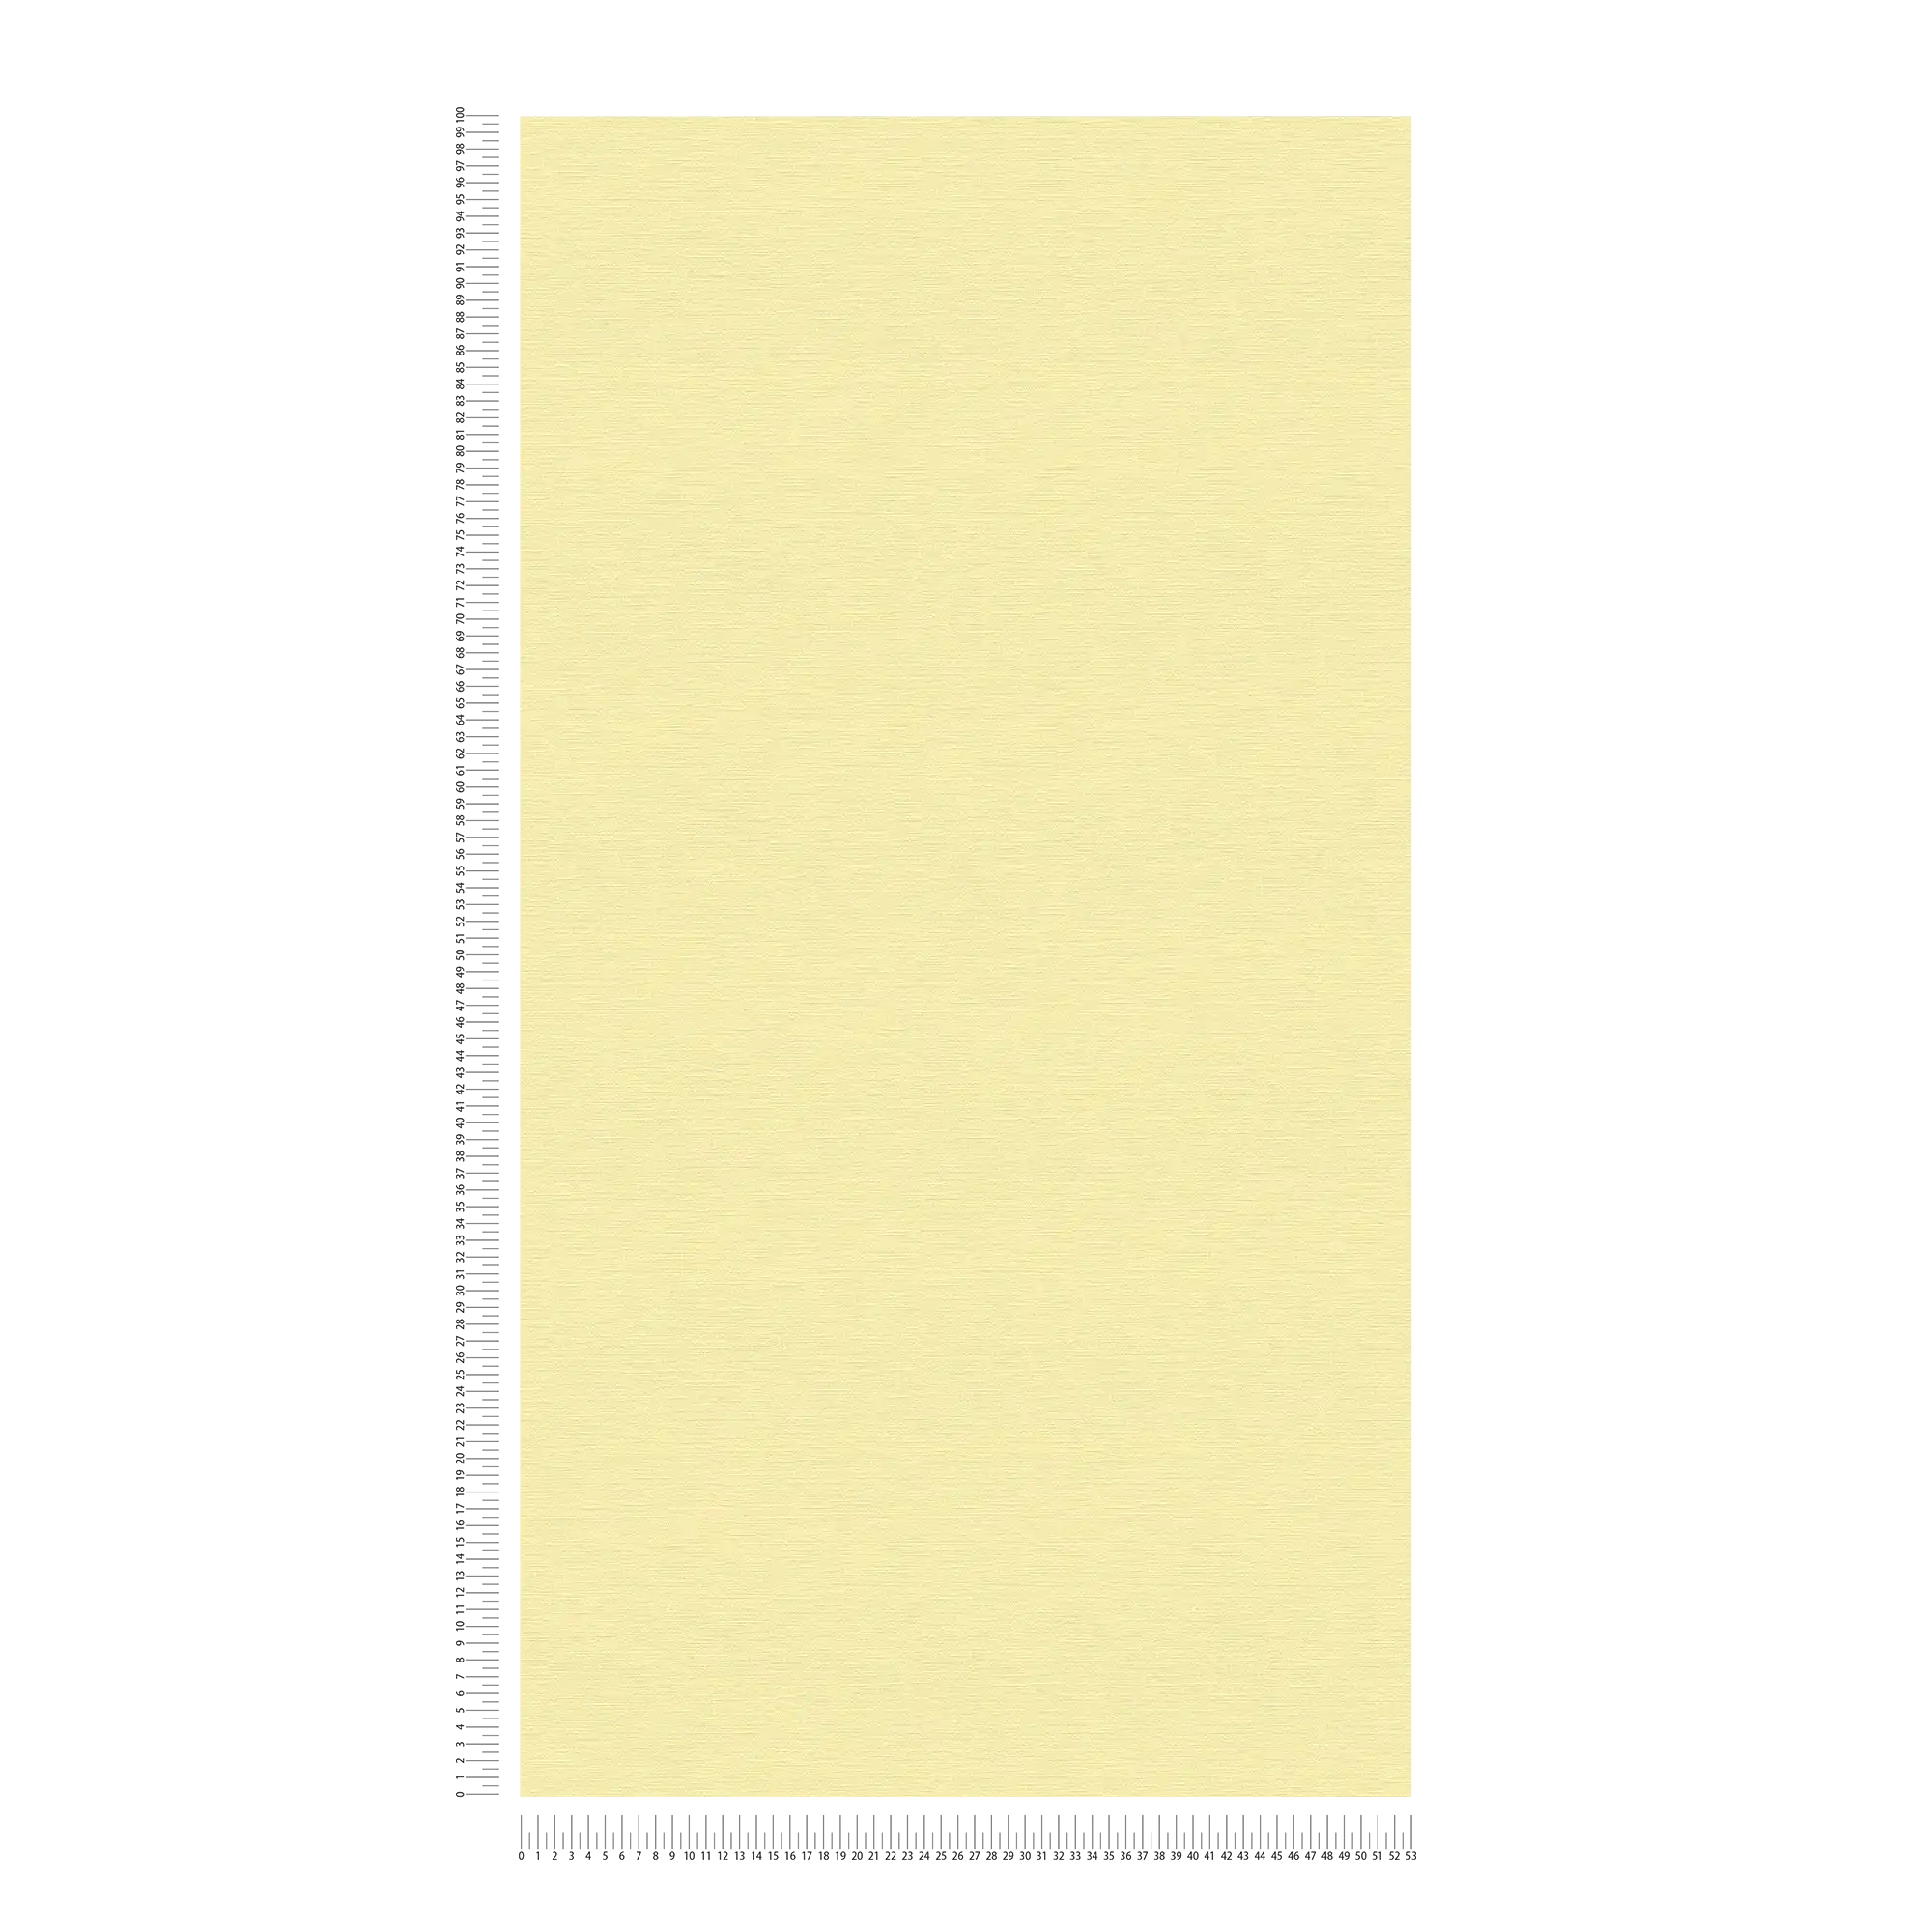             Carta da parati pastello a tinta unita gialla con struttura tessile
        